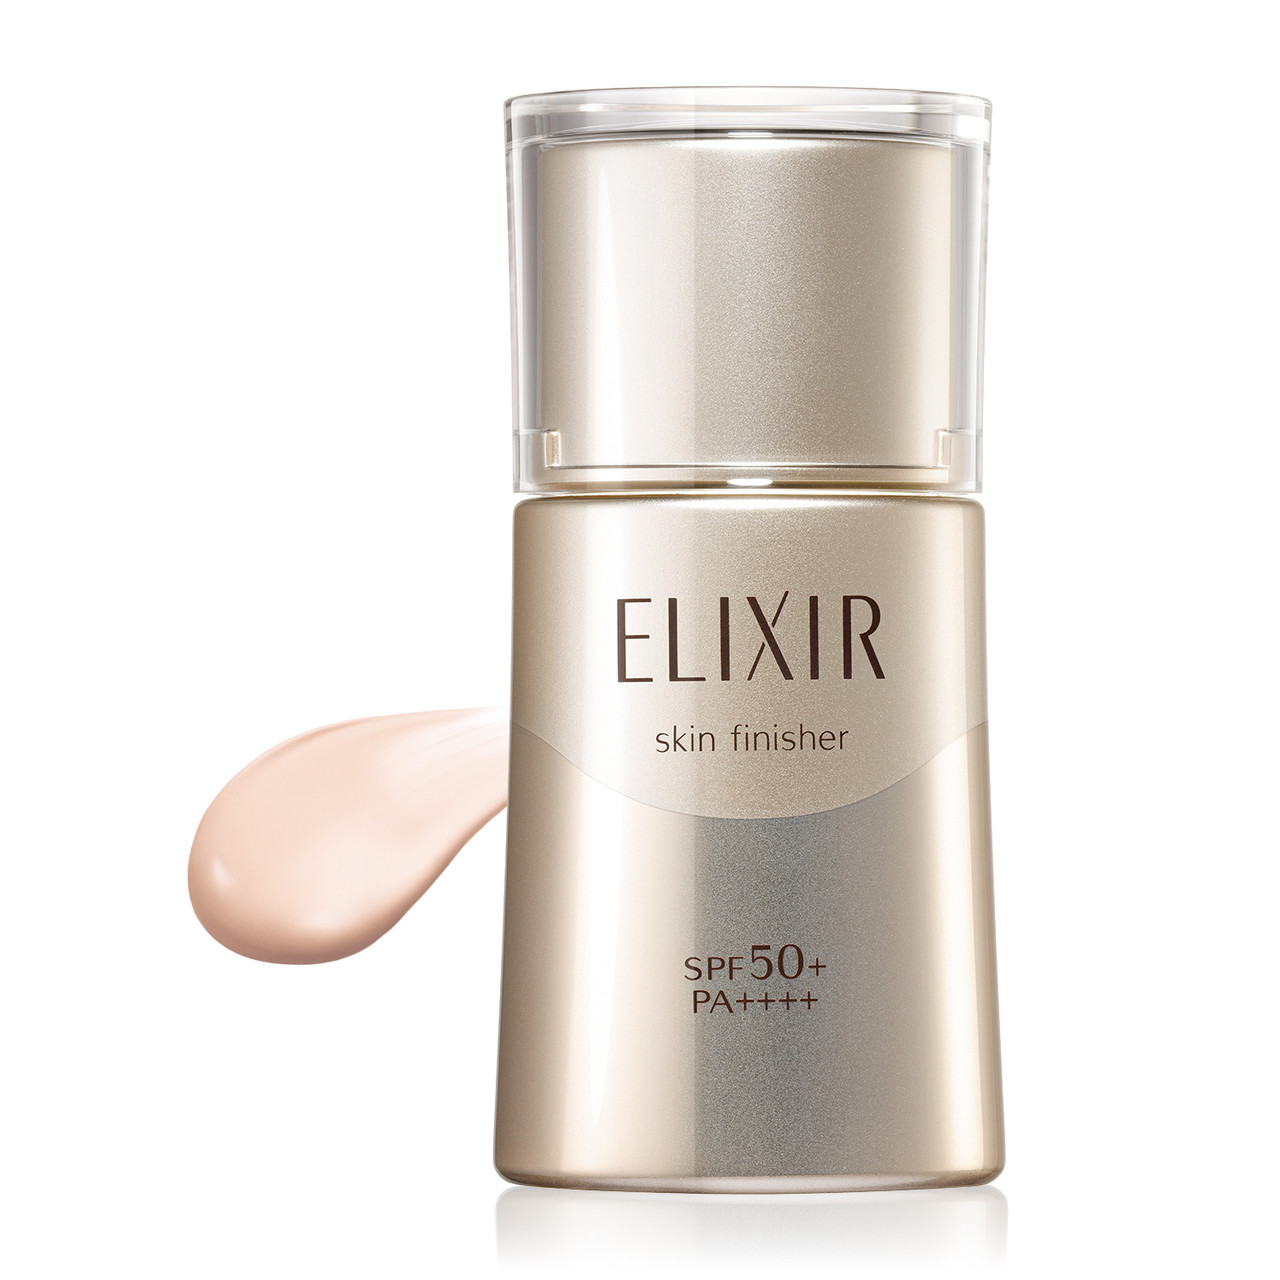 Shiseido Elixir Superieur Advanced Skin Care by age Skin Finisher Зволожуючий санскрин і база під макіяж, 30 мл